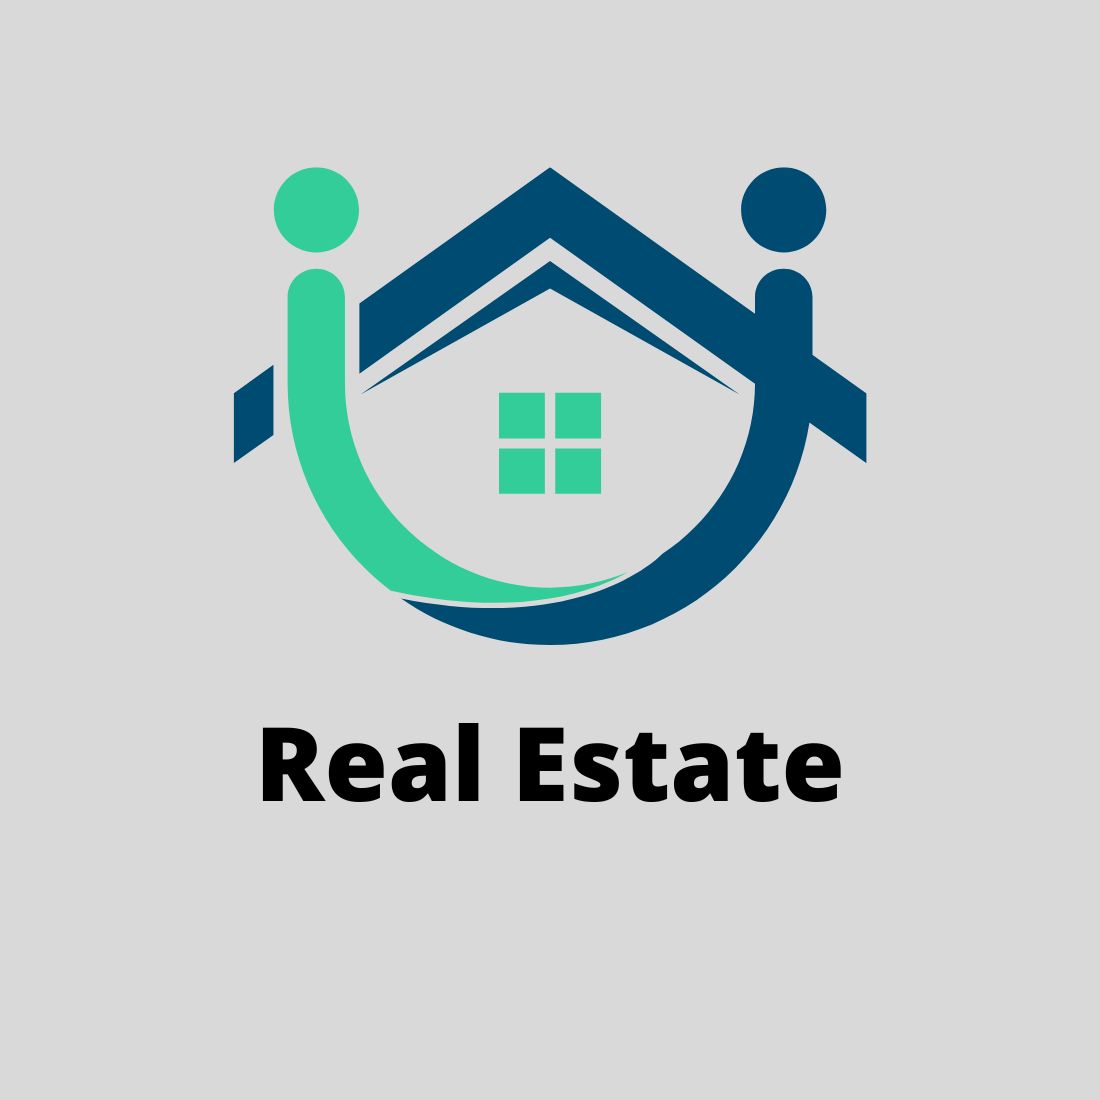 Real Estate Logo preview image.